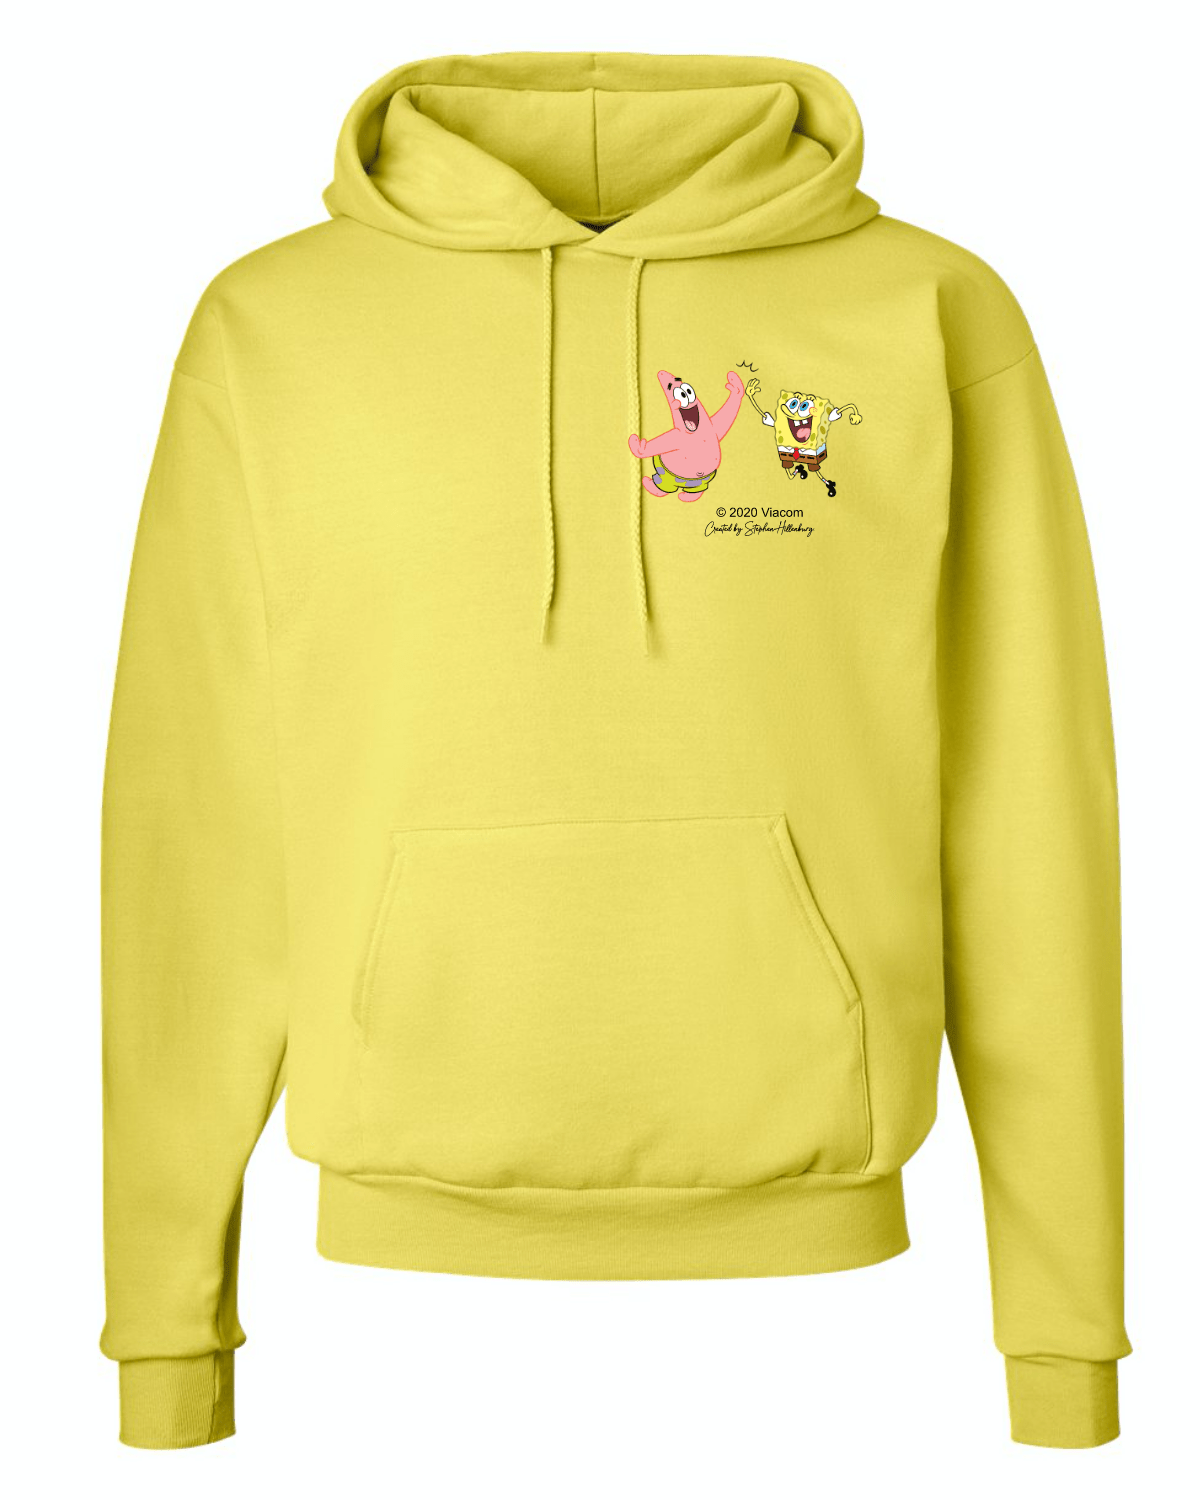 SpongeBob SquarePants Do Stuff Together Hooded Sweatshirt - Paramount Shop